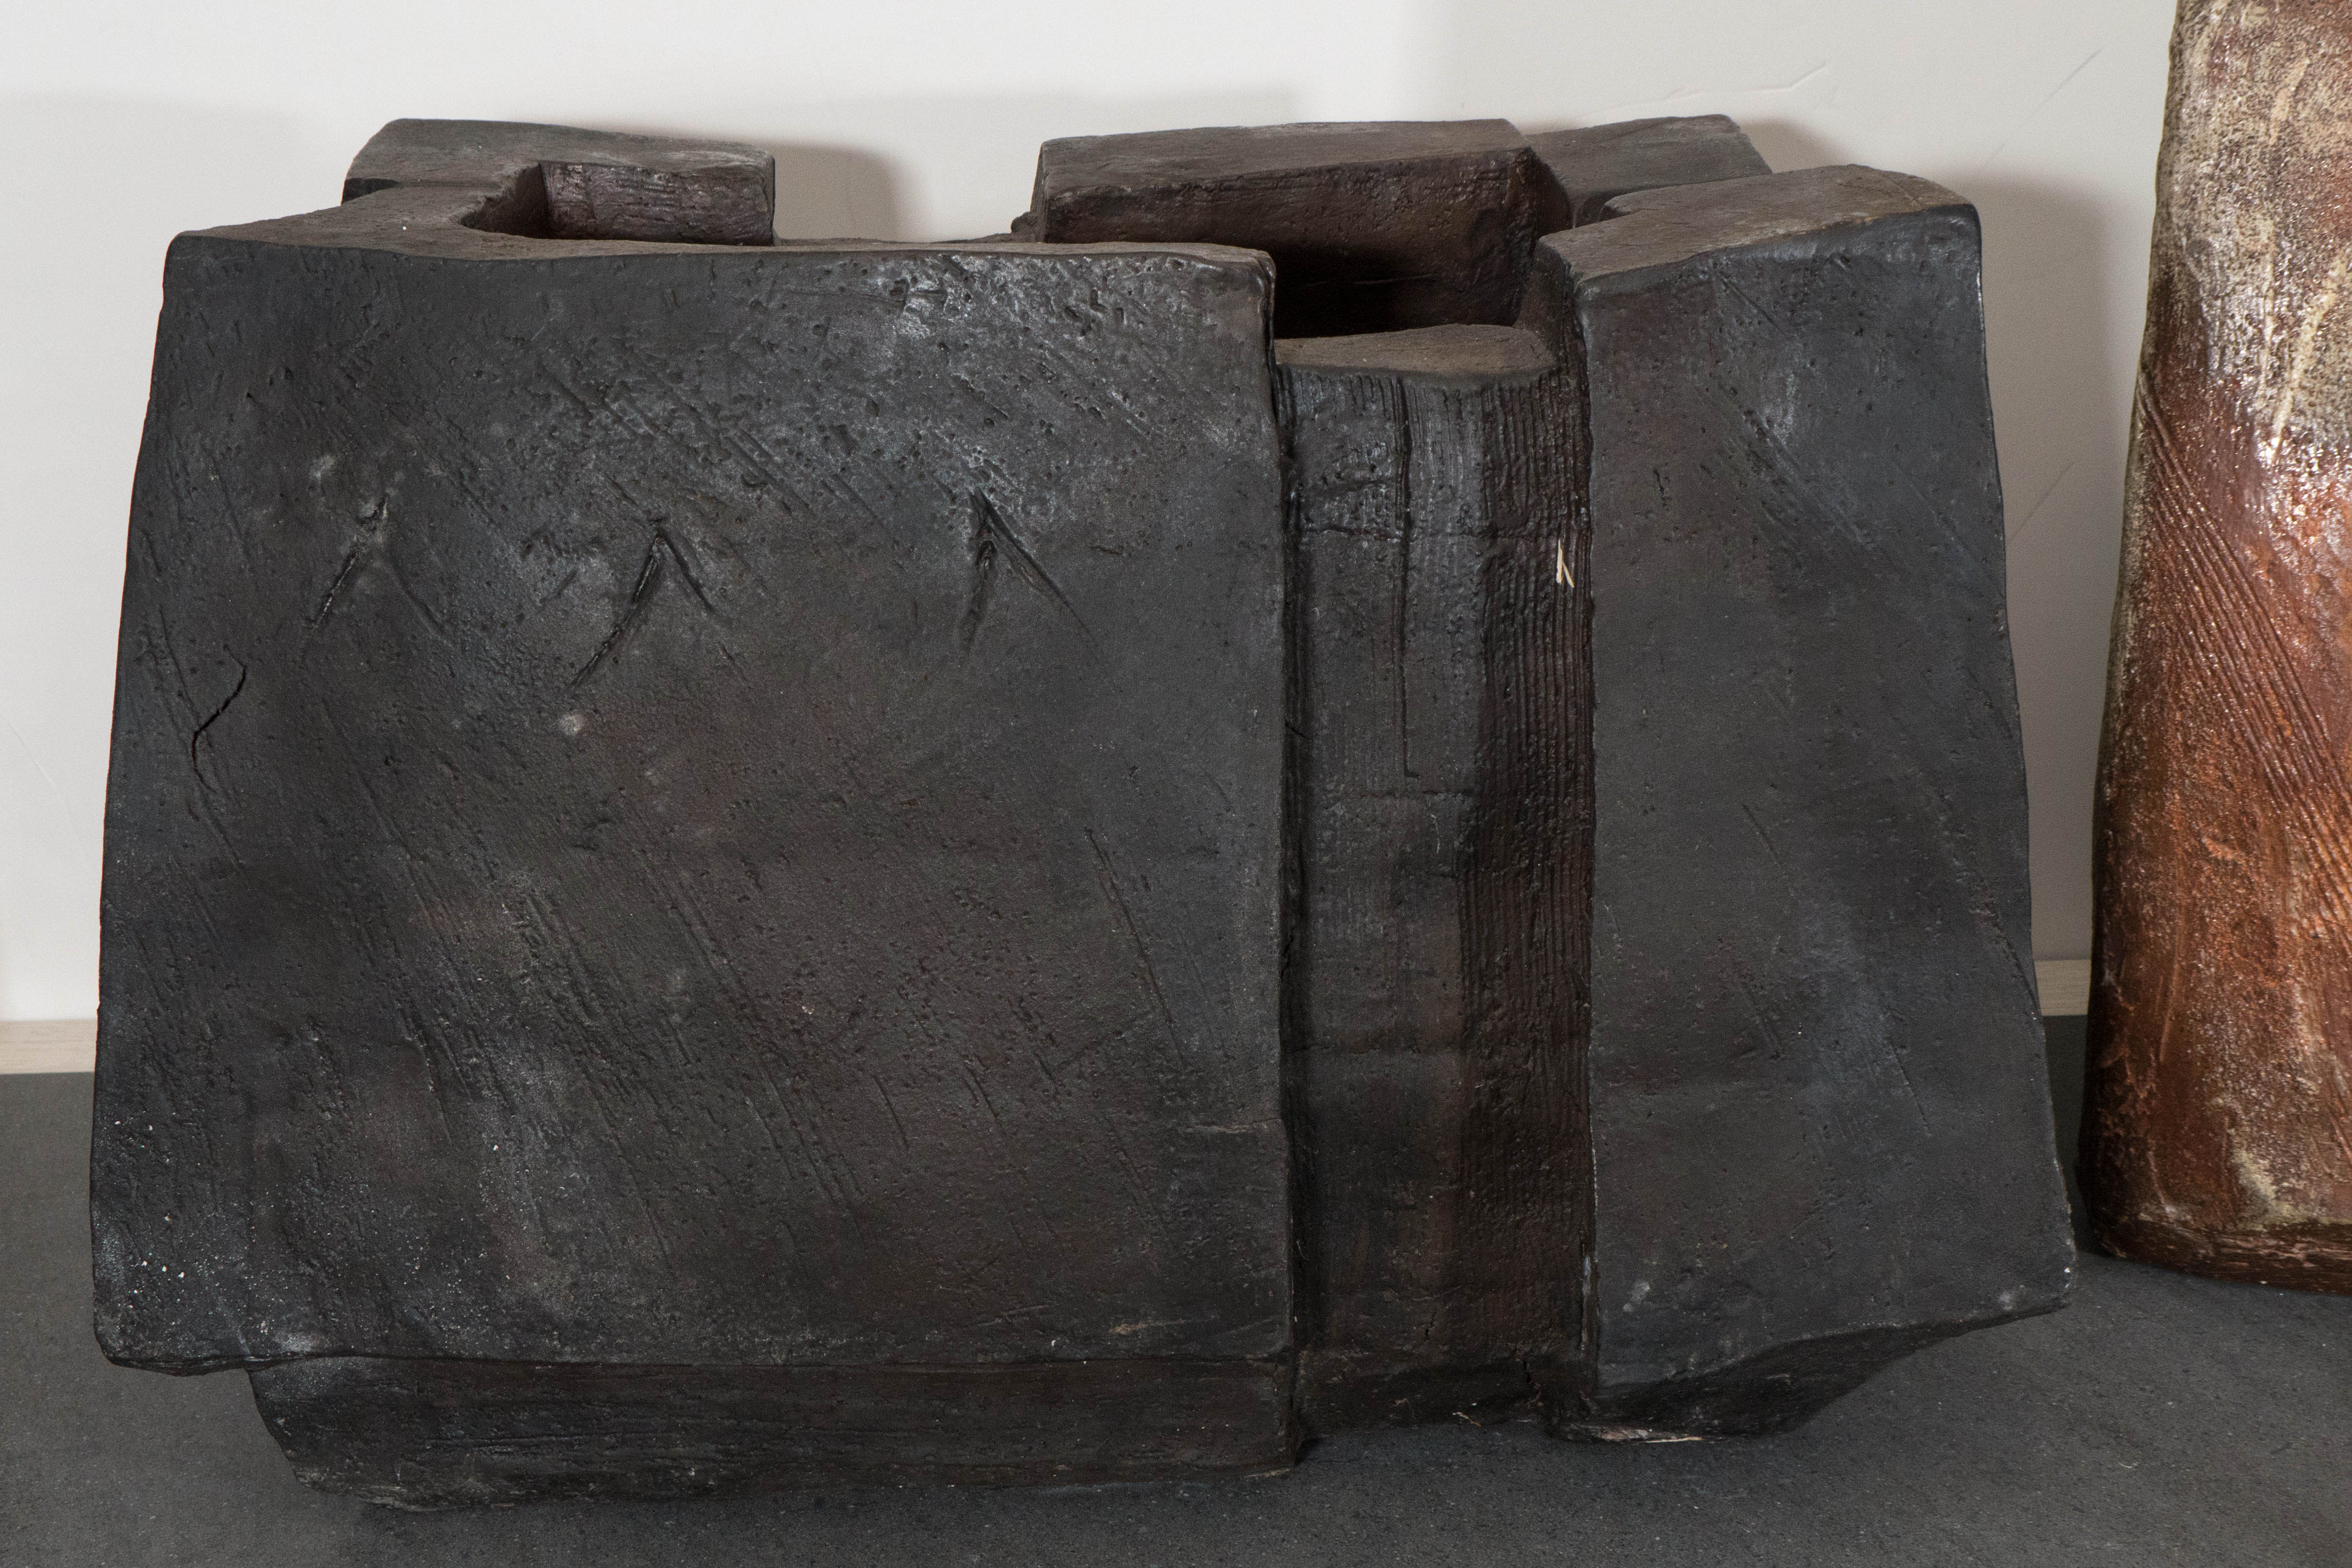 Contemporary Eric Astoul Large Sculptural Black Ceramic Object or Vase, Untitled 2014